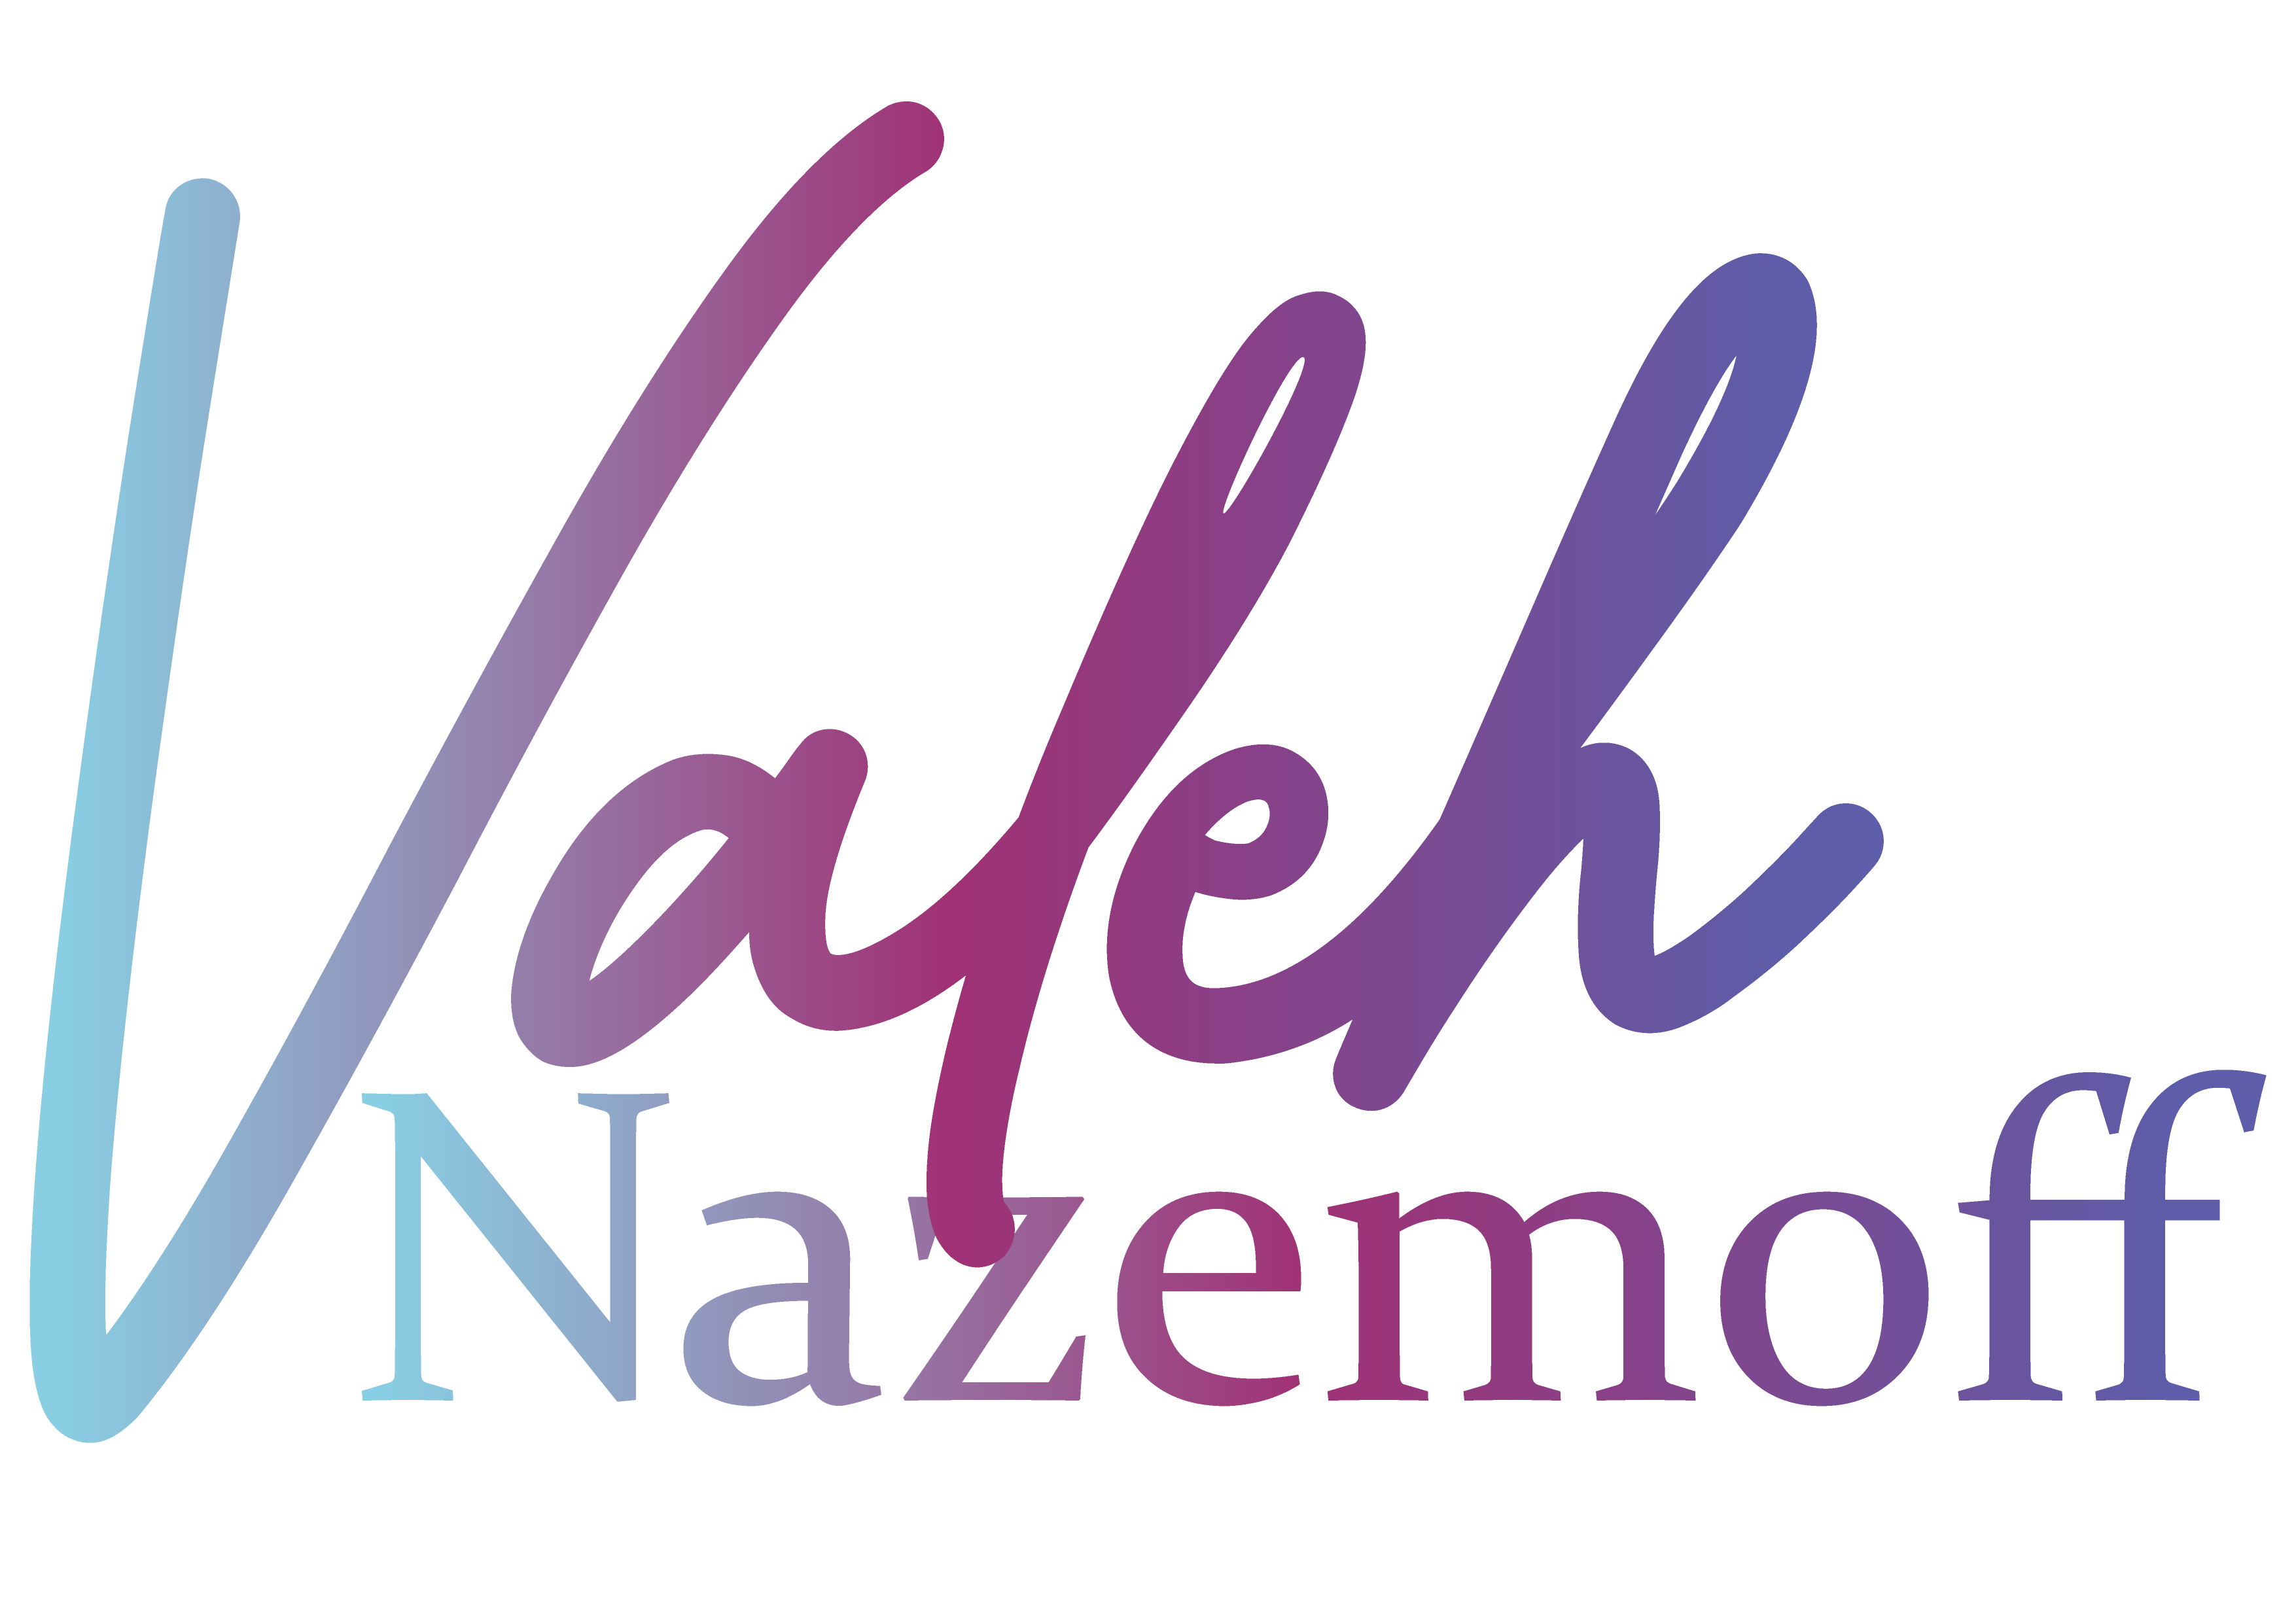 Valeh Nazemoff